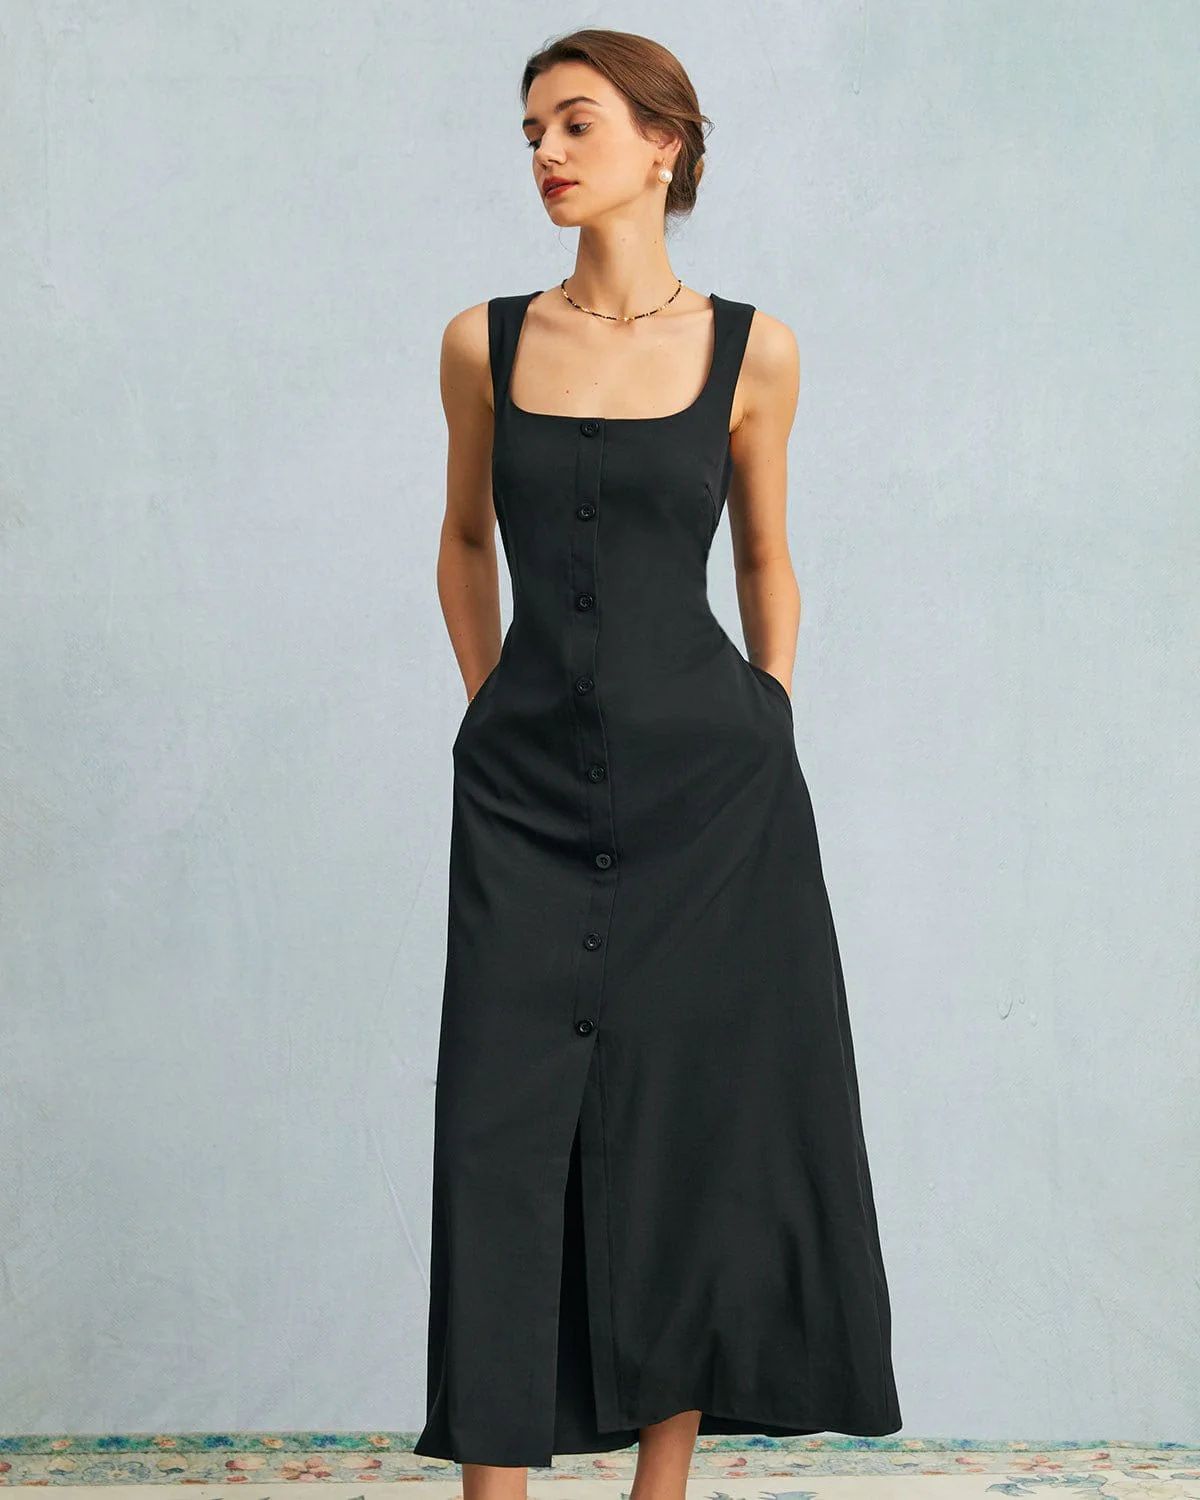 The Black U Neck Tie Back Sleeveless Maxi Dress - Women's Tie Back Sleeveless Maxi Dress - Black ... | rihoas.com